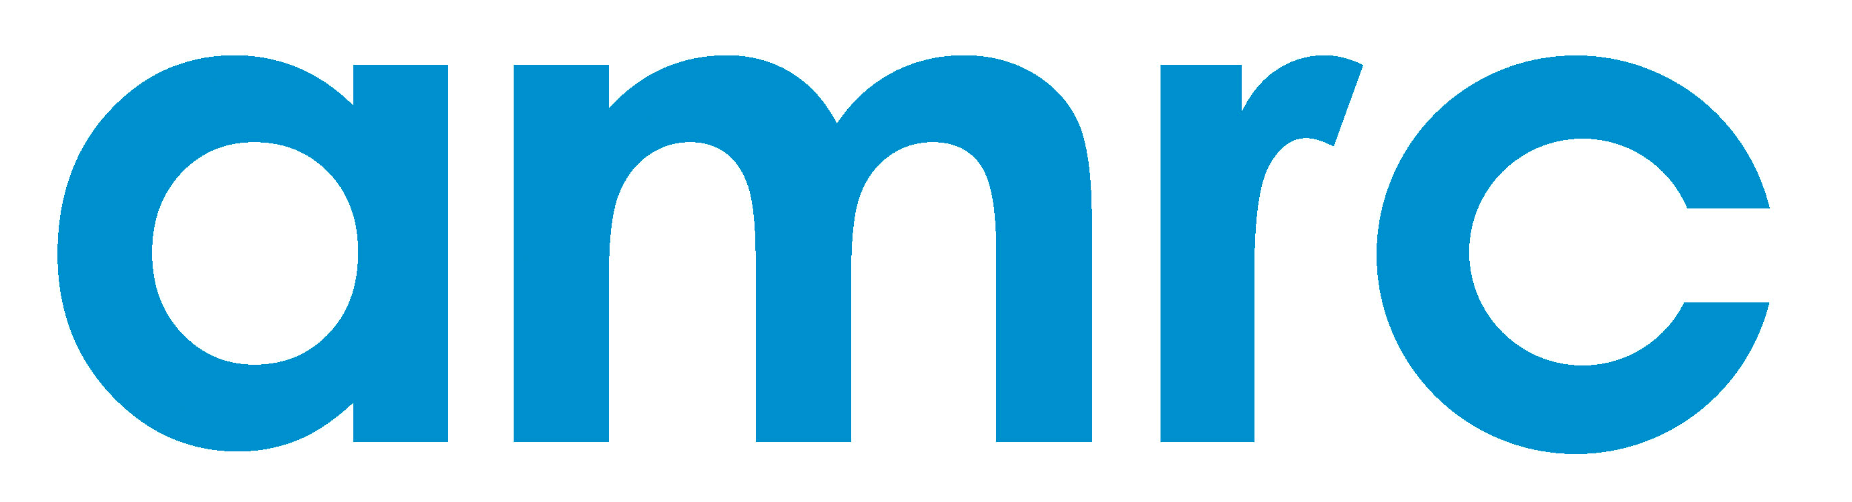 AMRC Logo